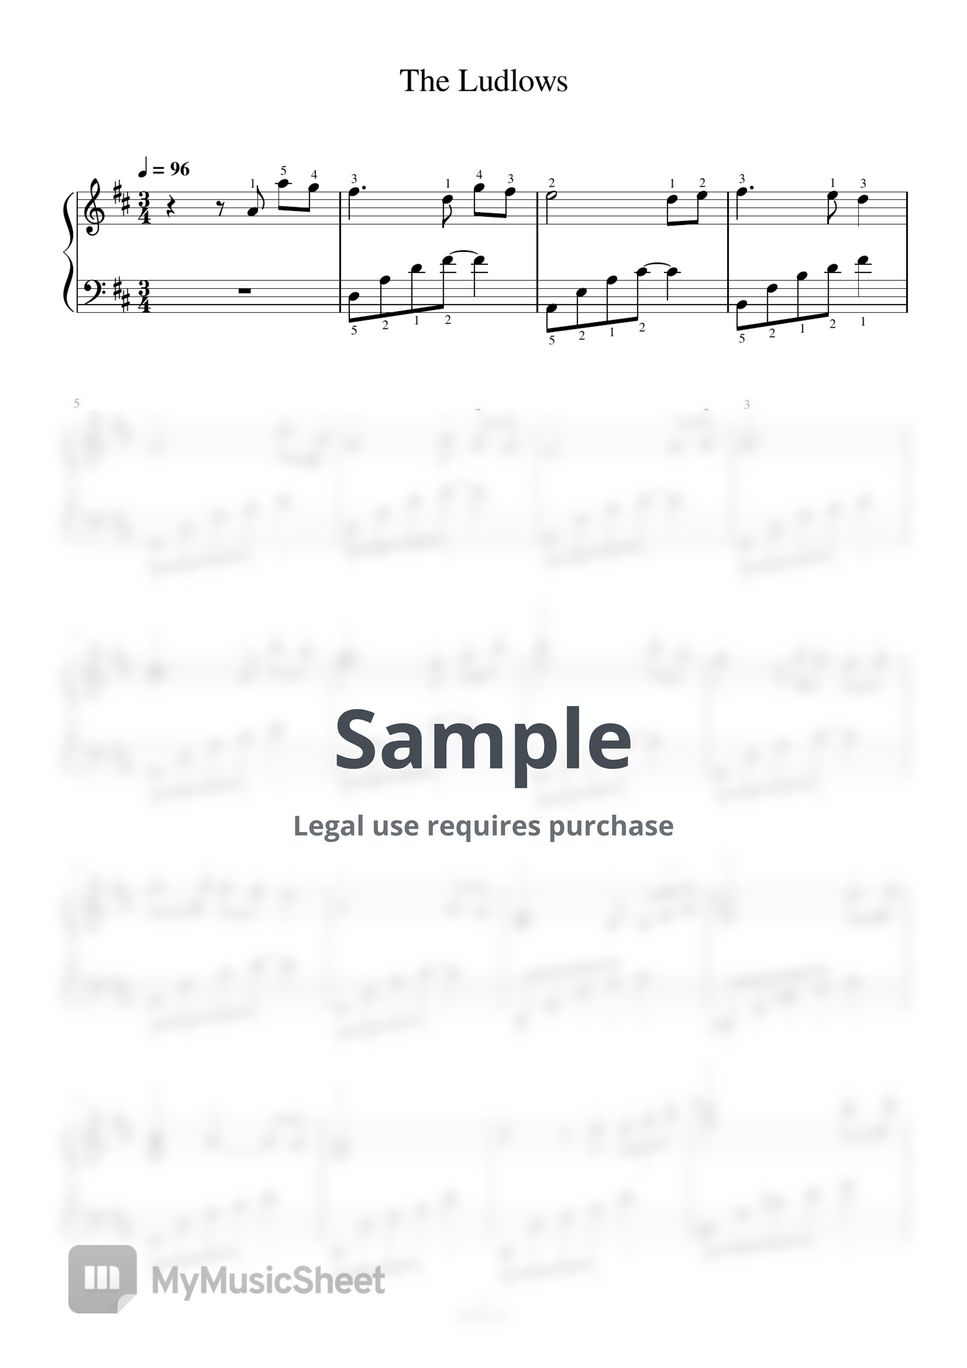 Singin' Strings - The Ludlows-全指法钢琴谱高清正版完整版 (Full Fingering Piano Score) by 紫韵音乐